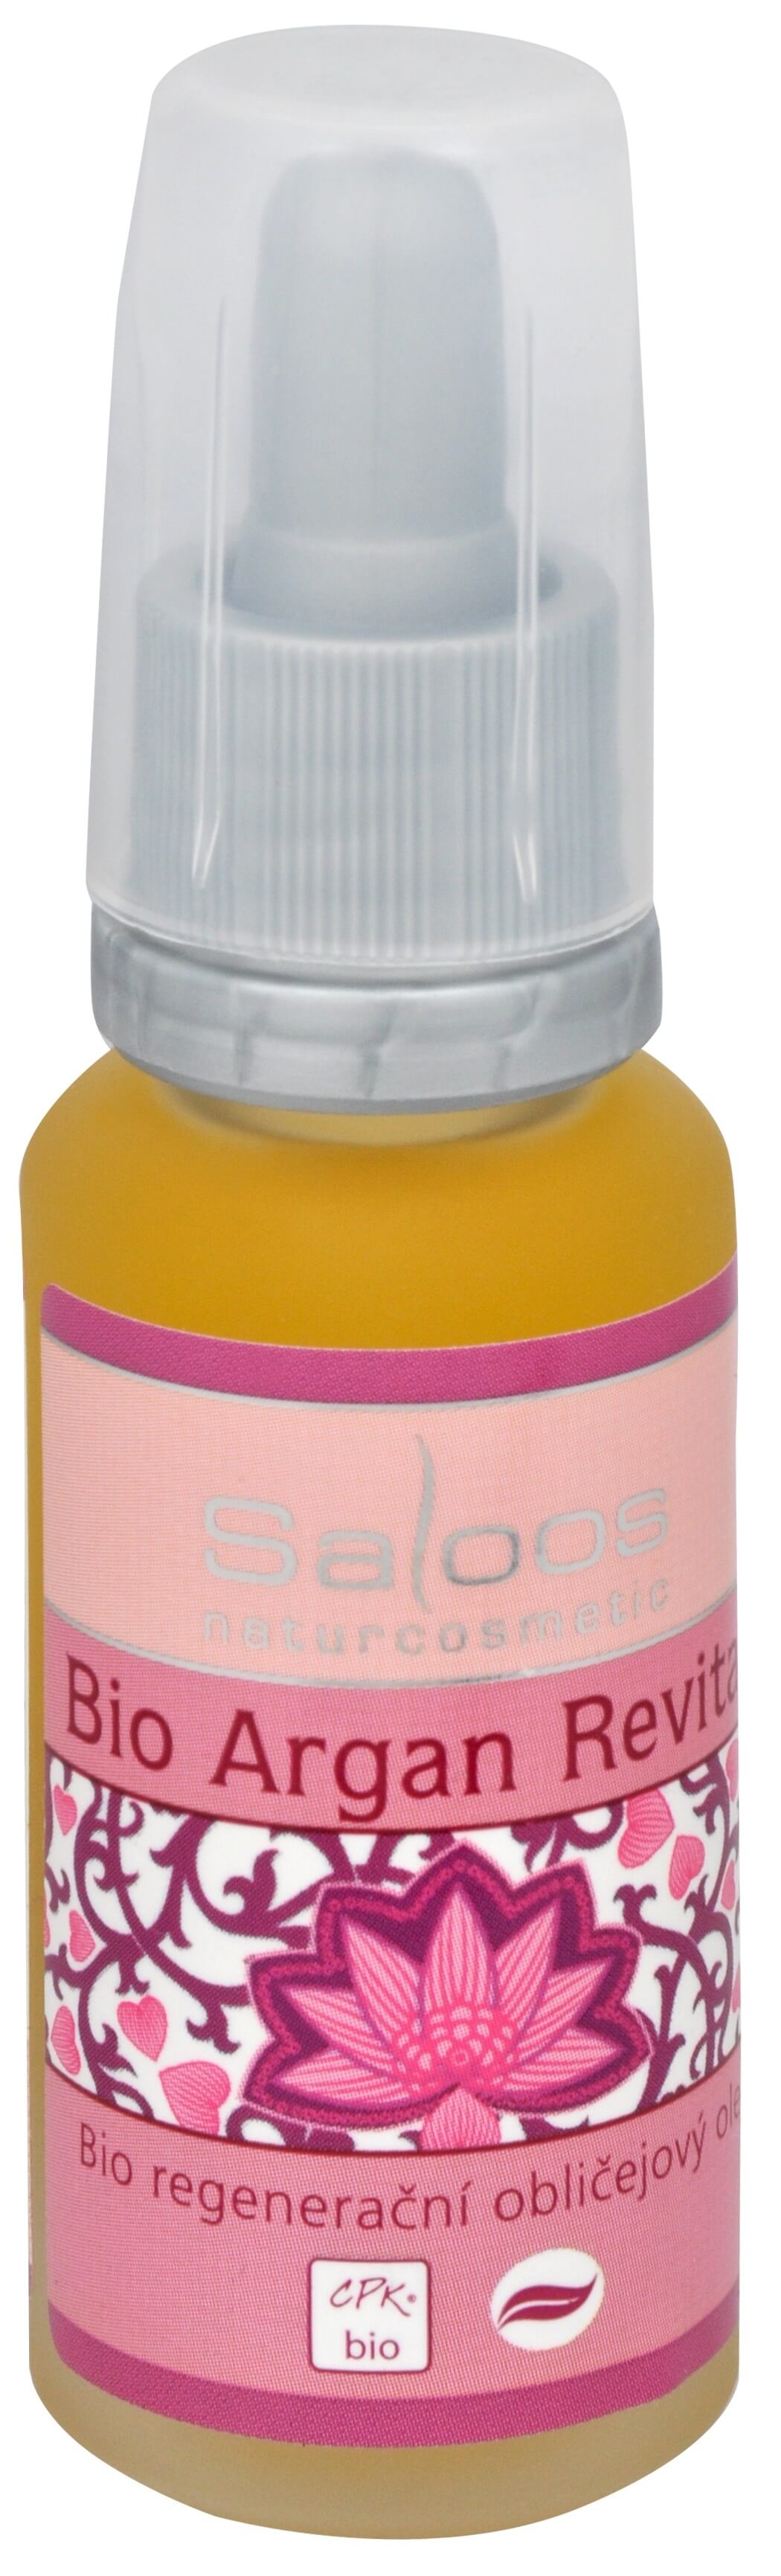 Saloos Bio regenerační obličejový olej - Argan Revital 20 ml